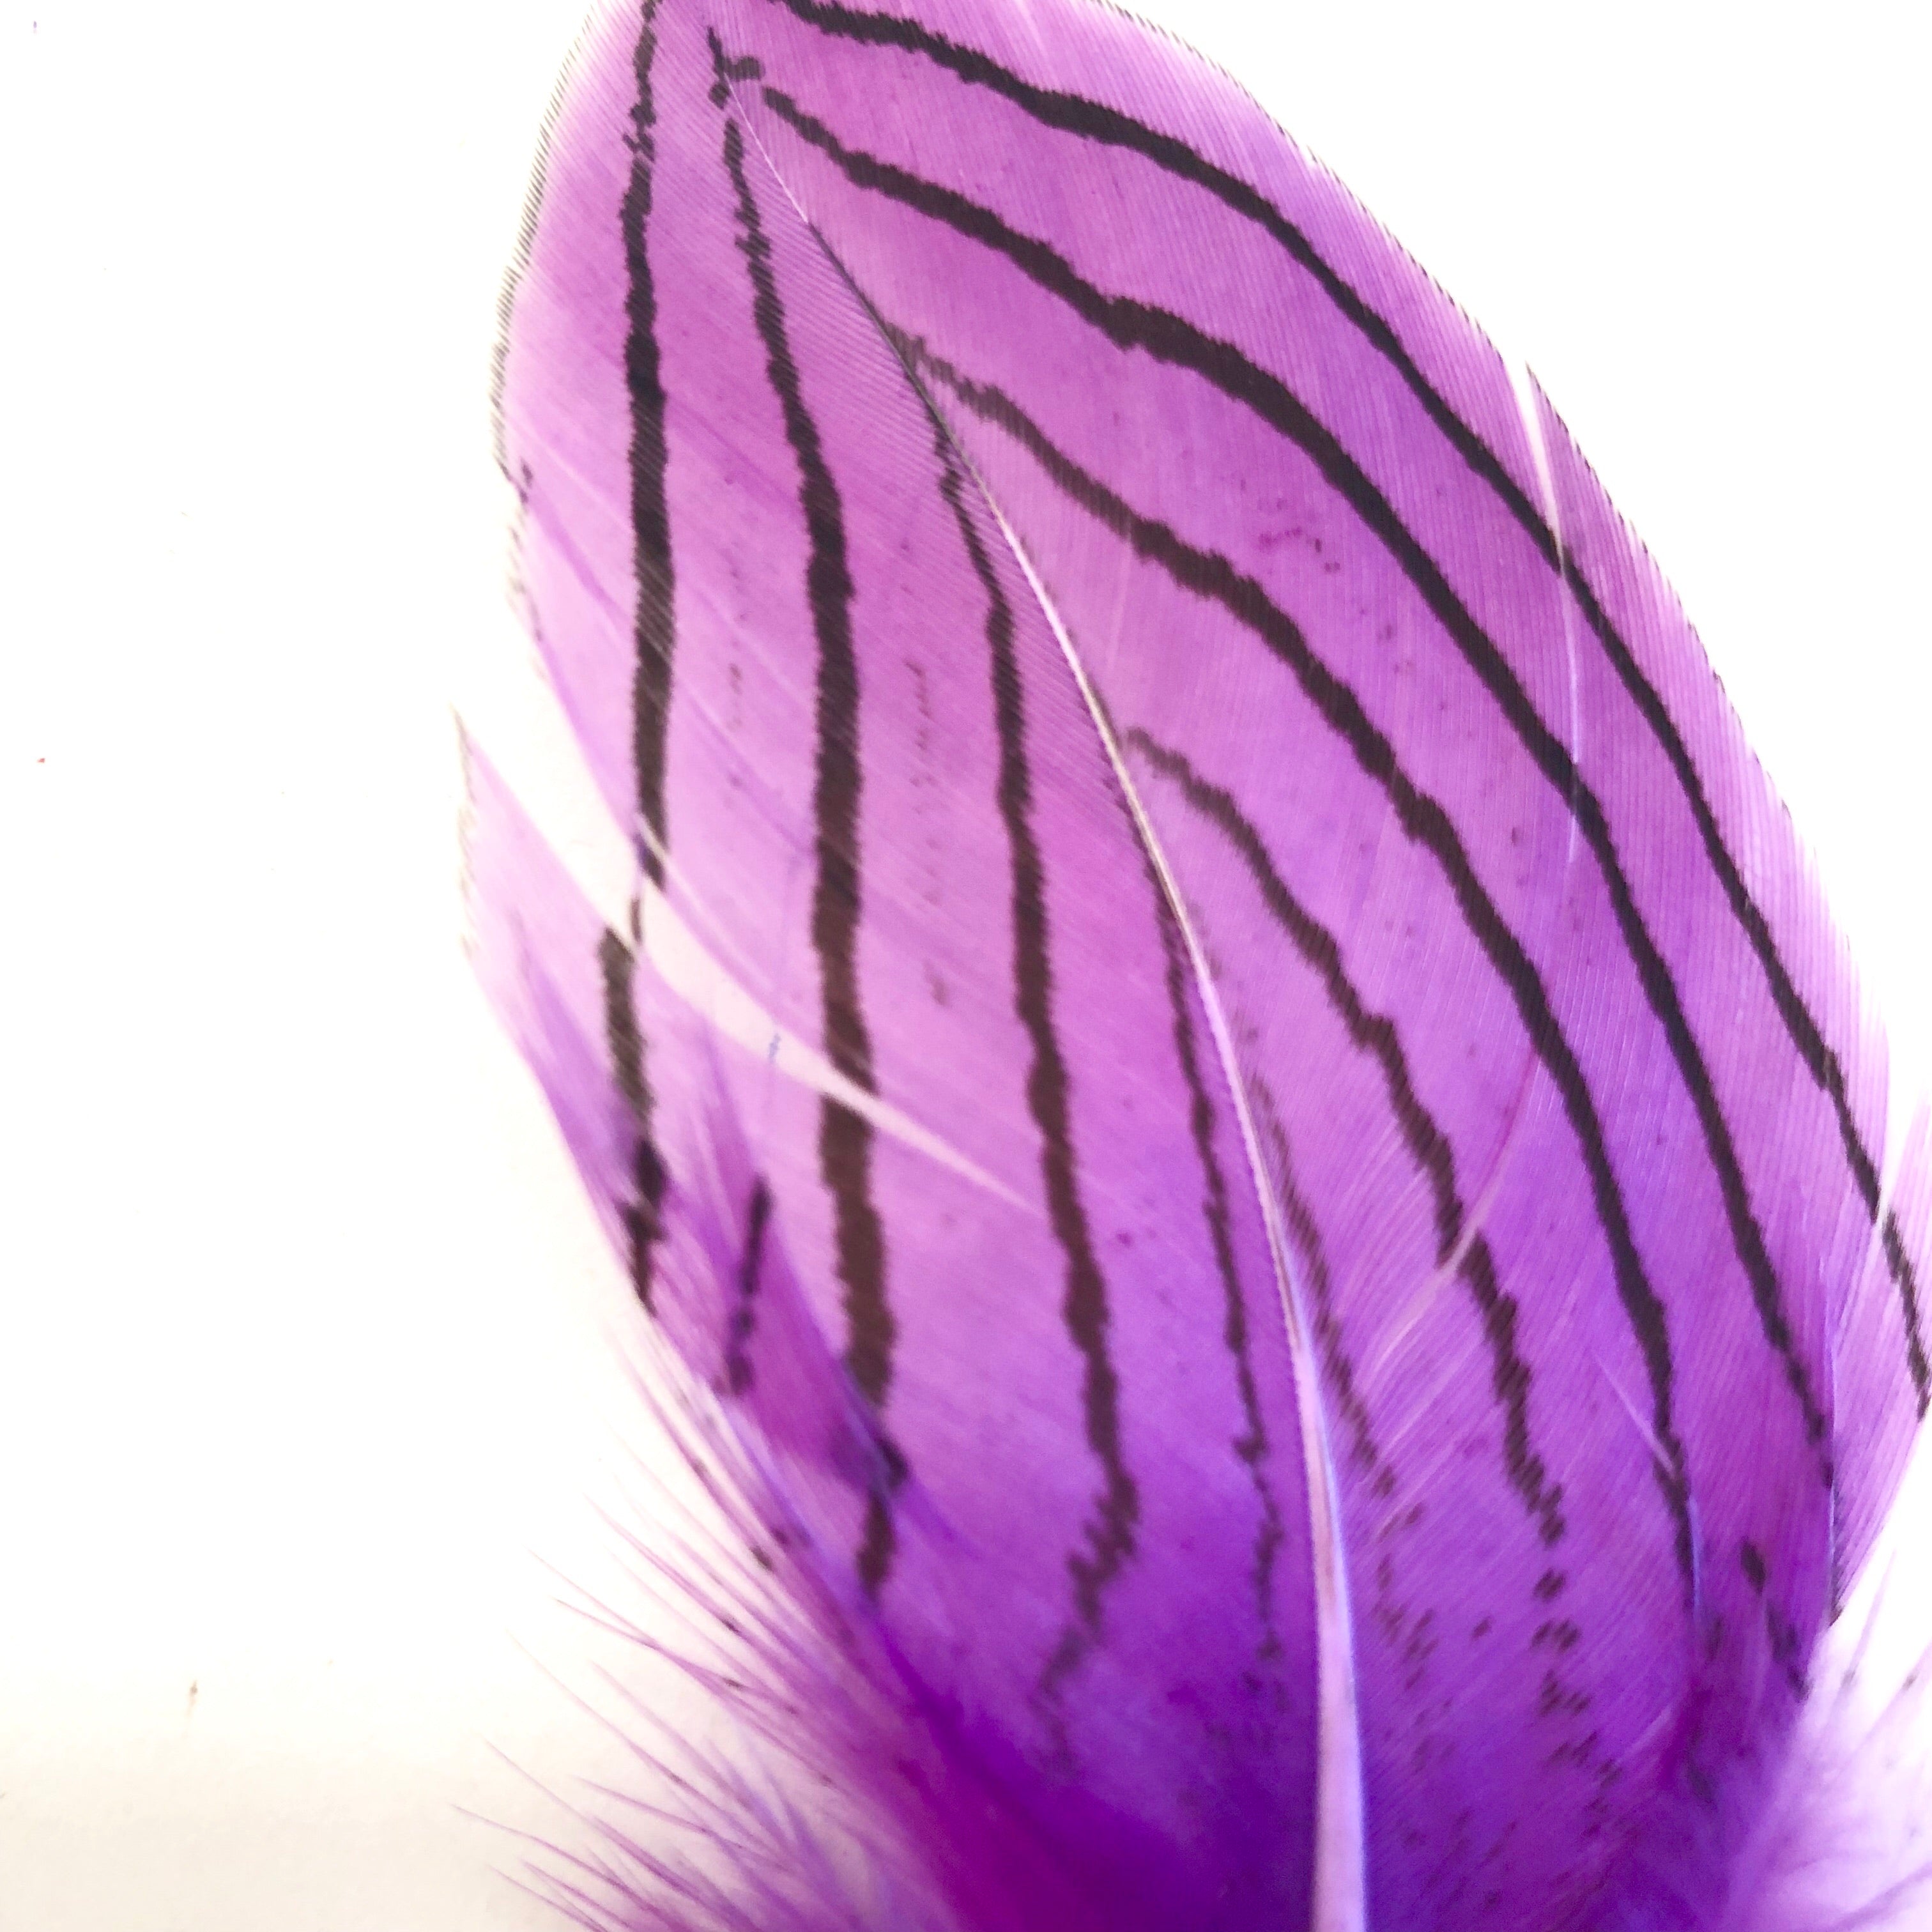 Under 6" Silver Pheasant Tail Feather x 10 pcs - Purple